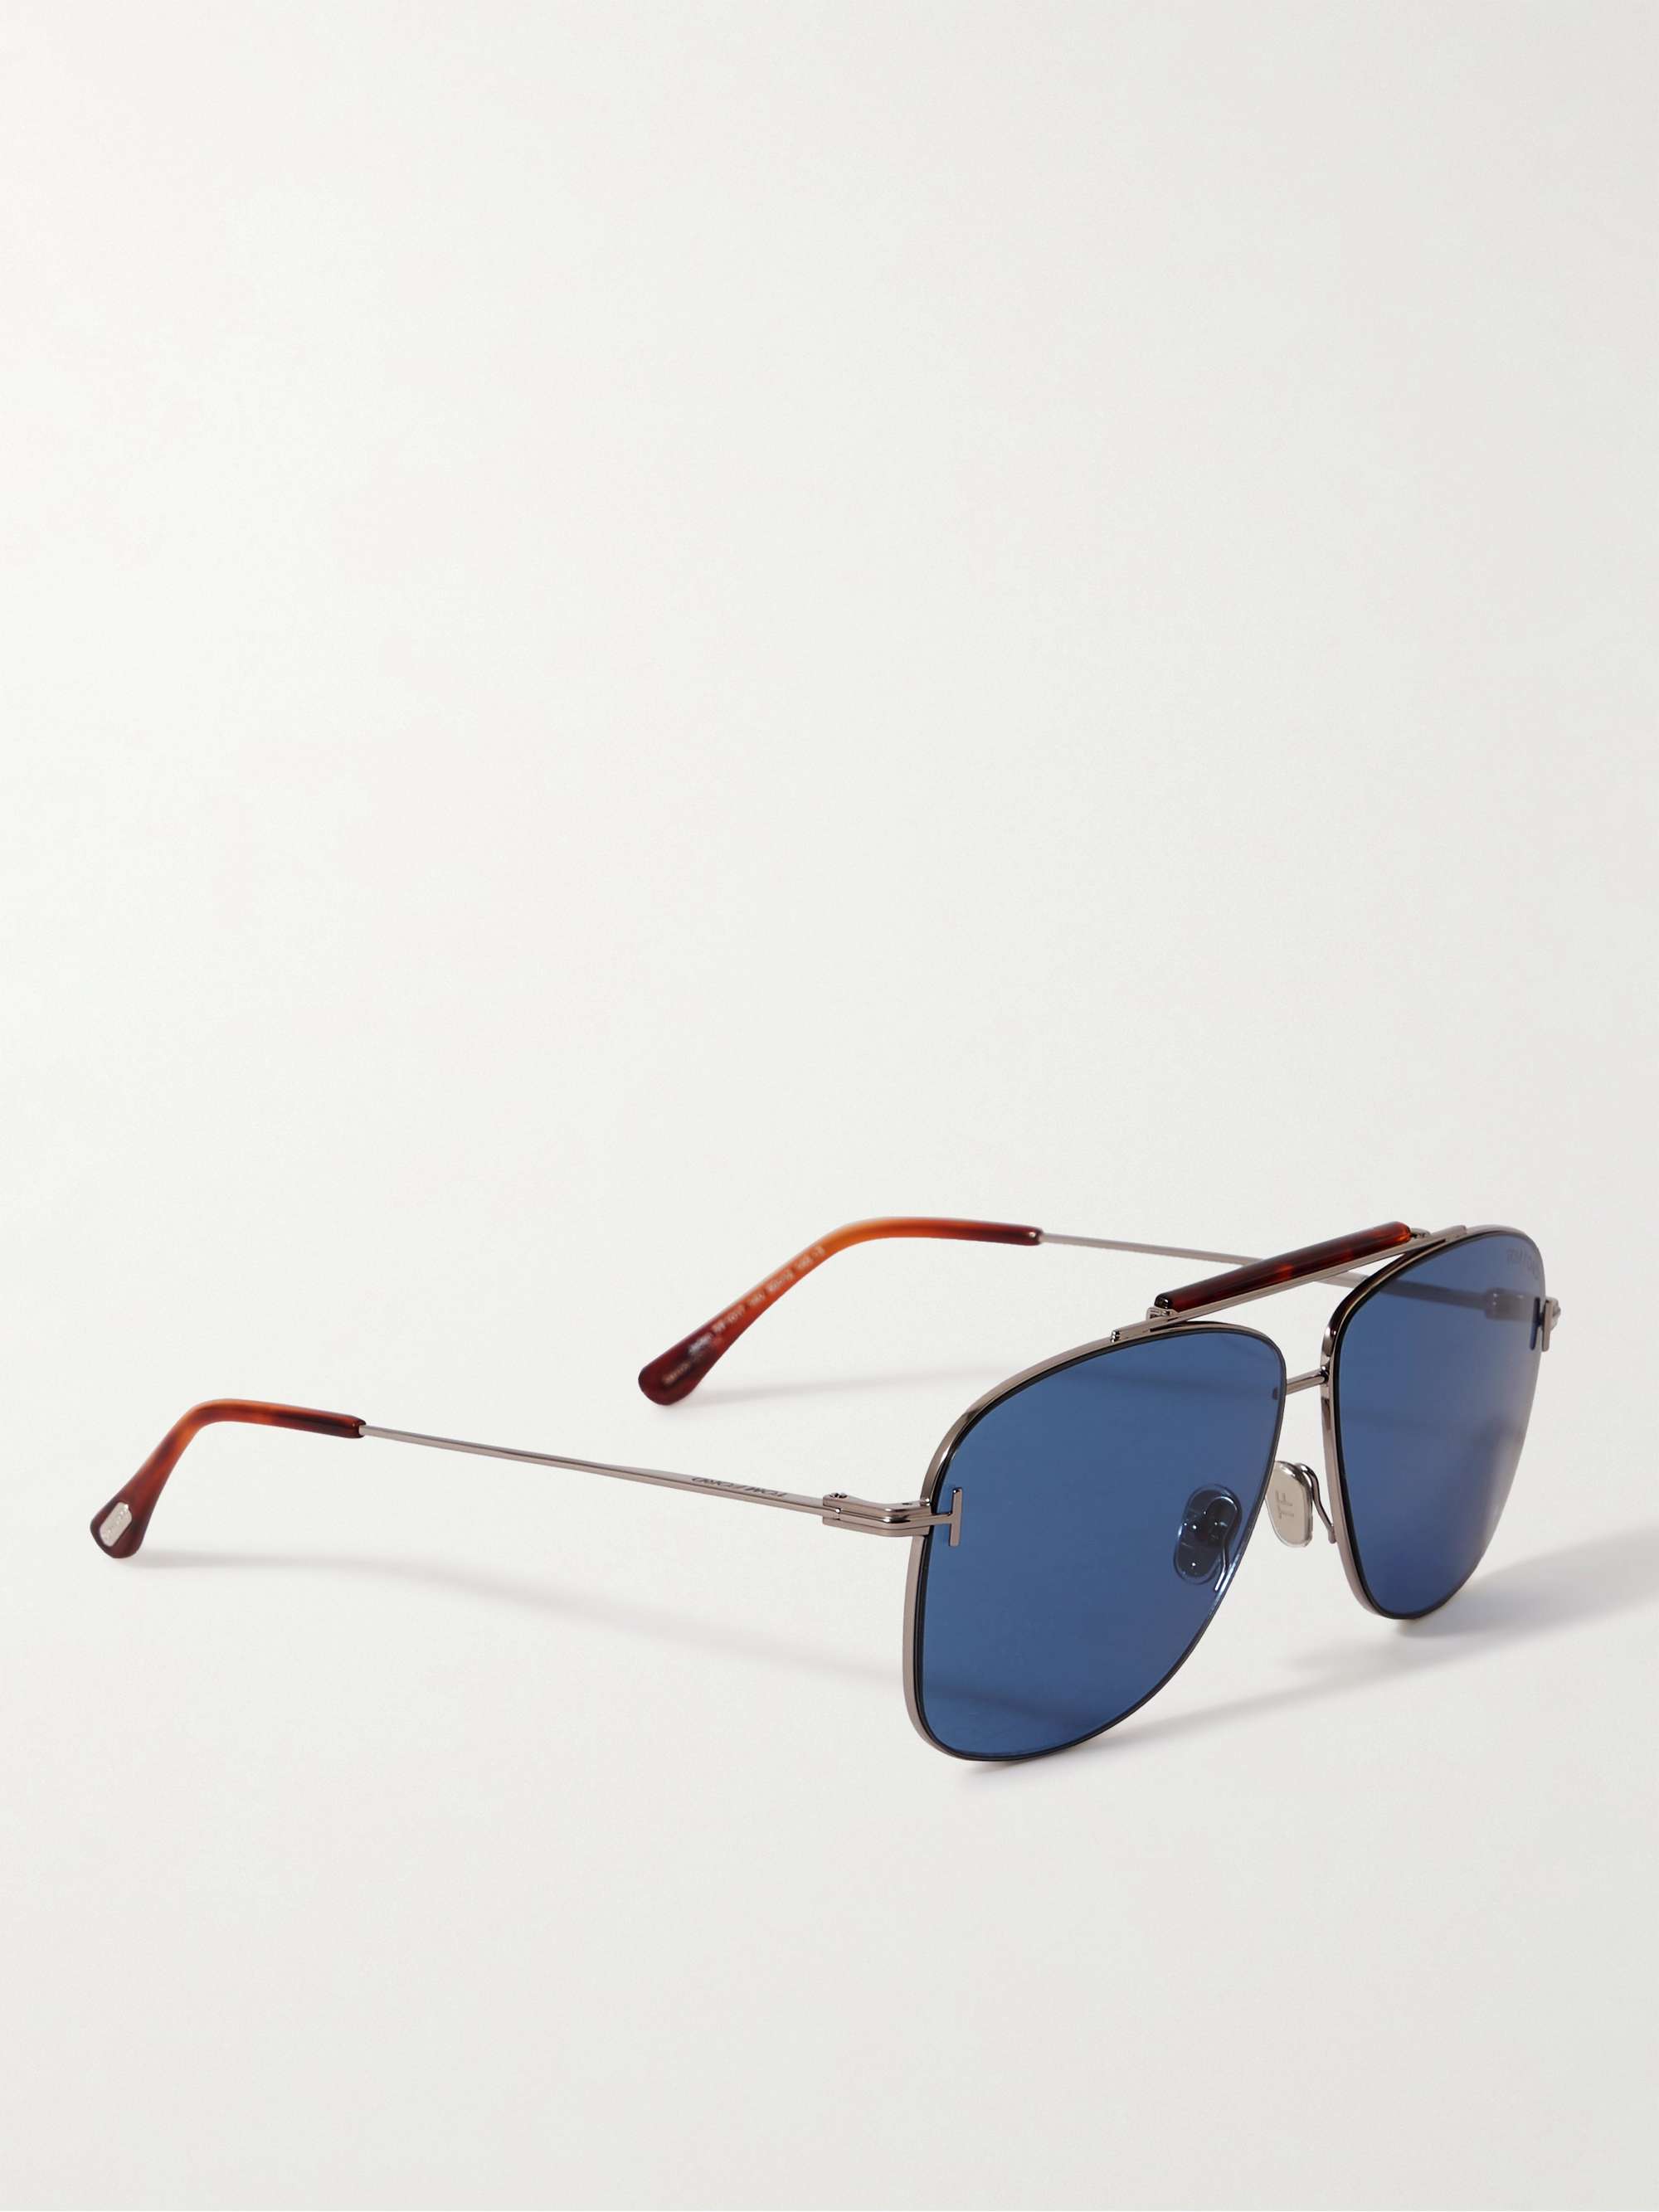 TOM FORD Aviator-Style Silver-Tone and Tortoiseshell Acetate Sunglasses